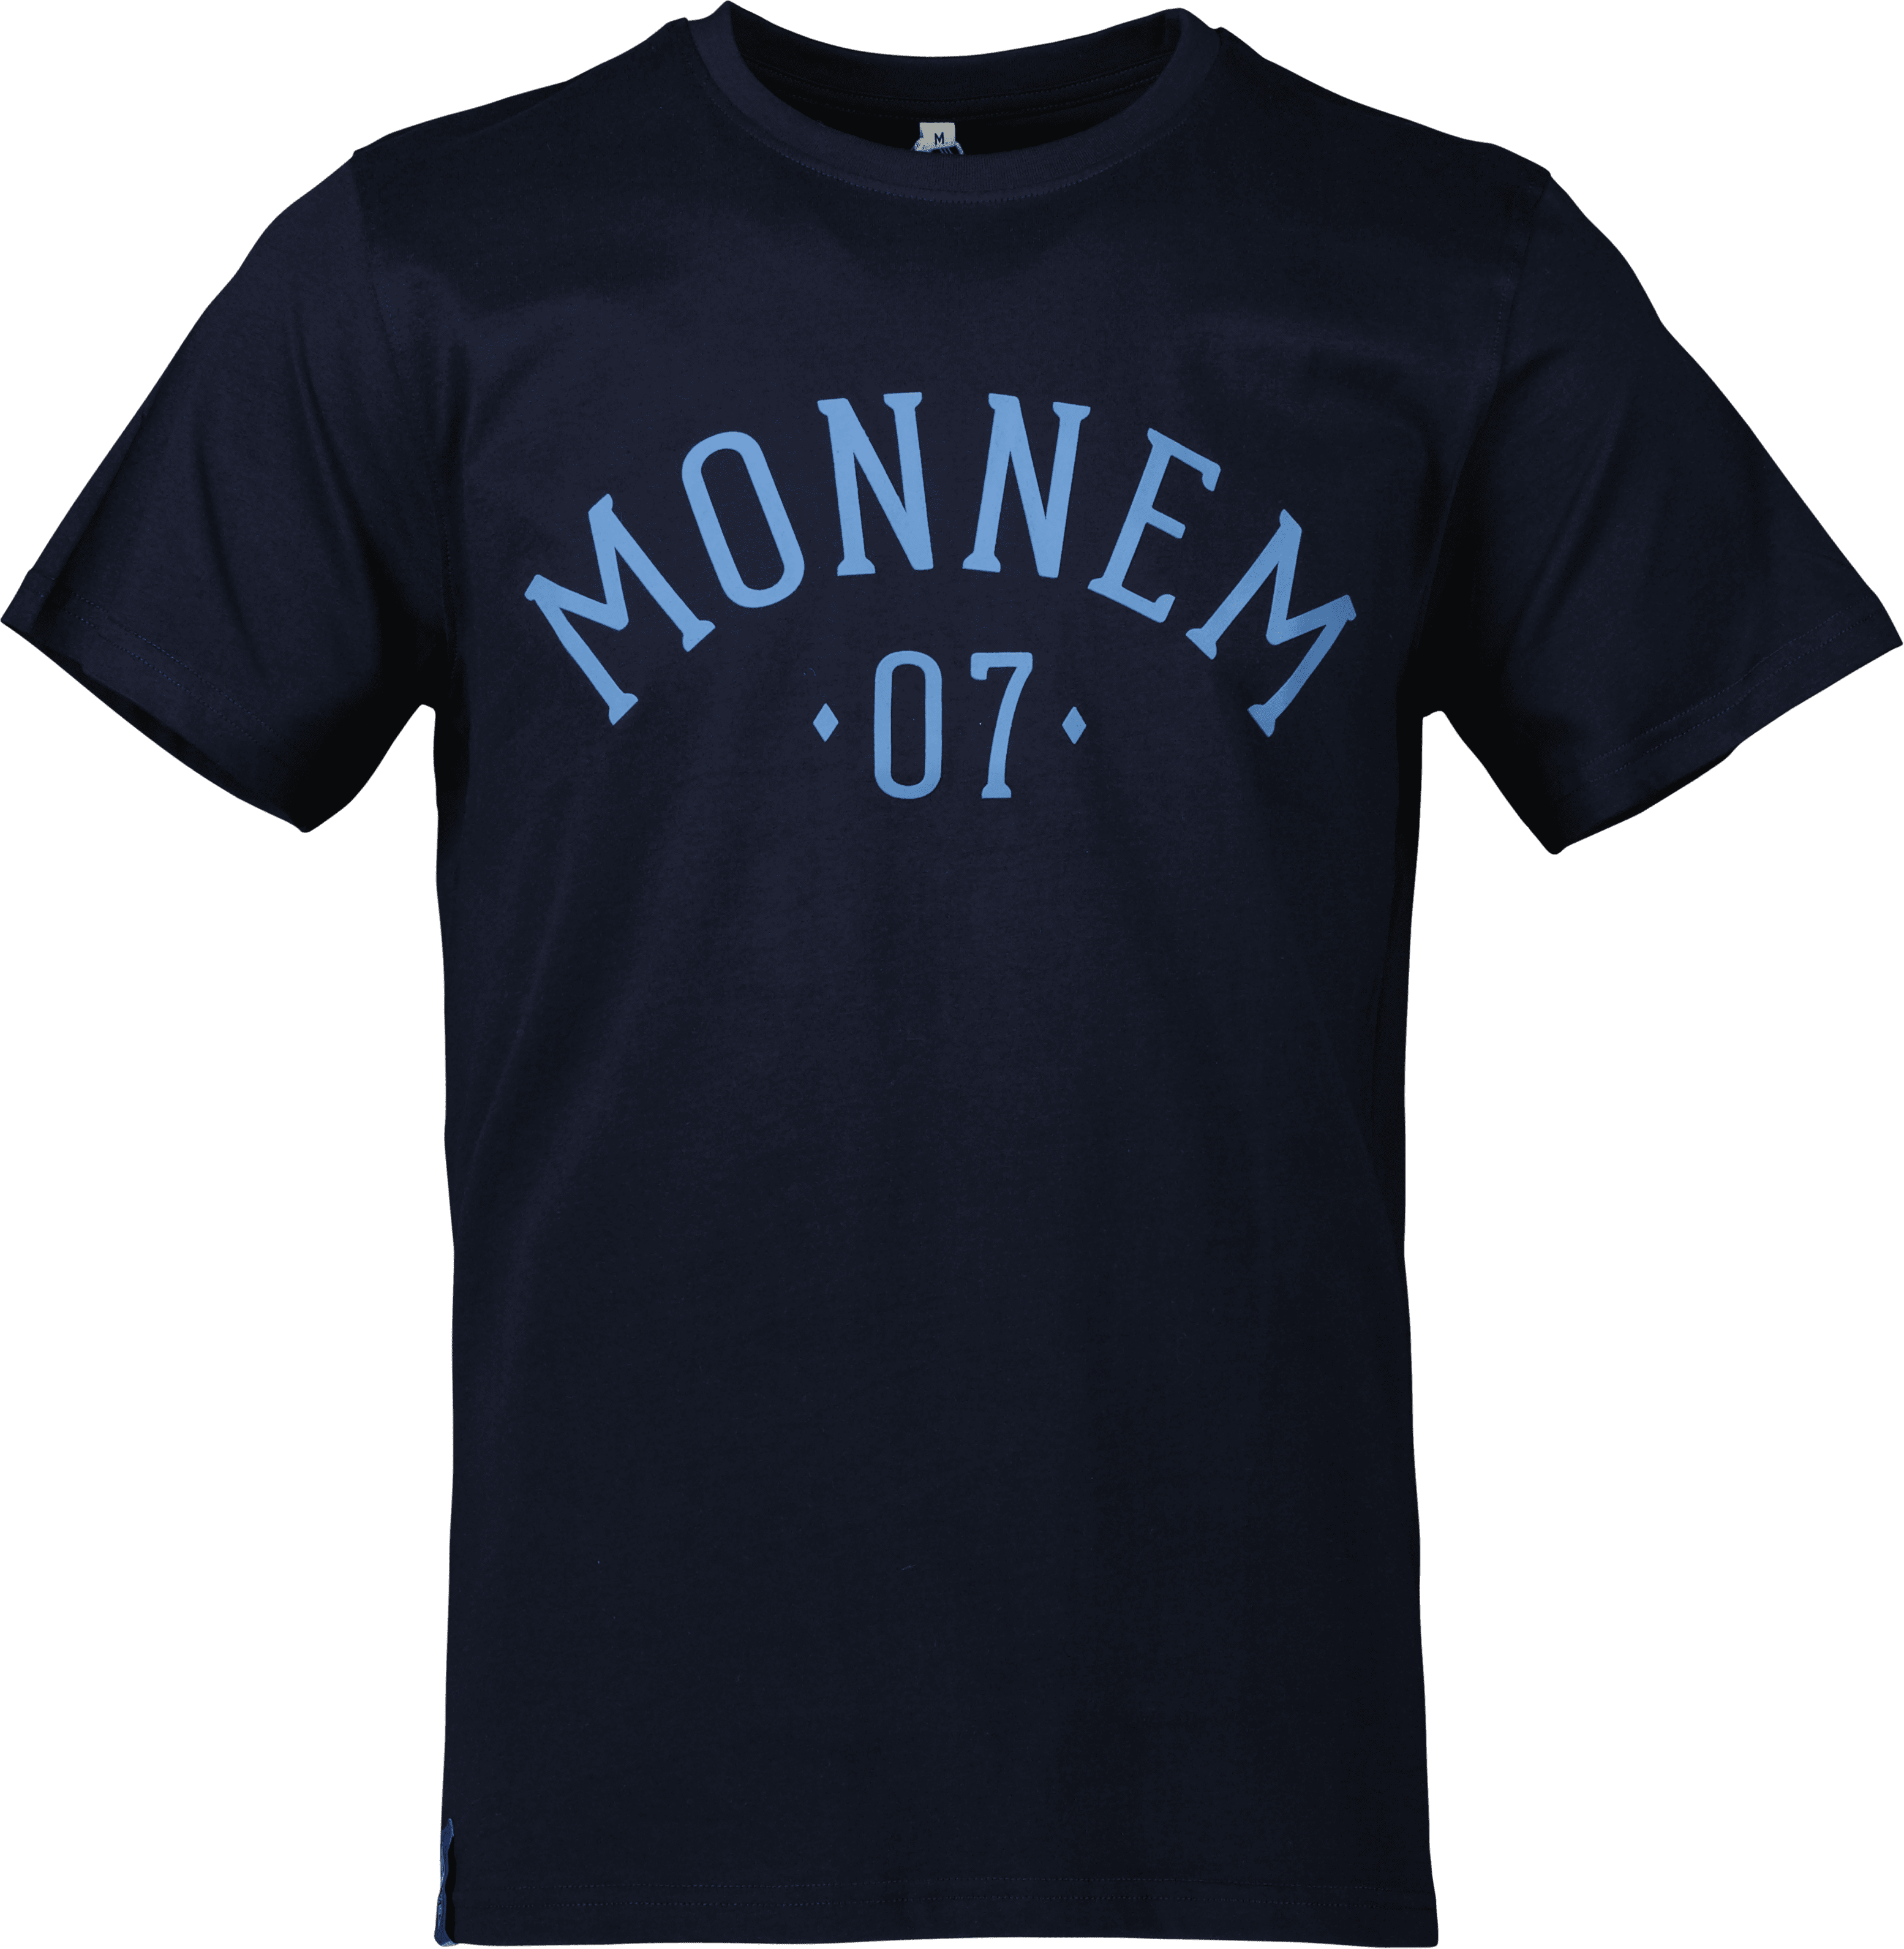 T-Shirt - Monnem 07